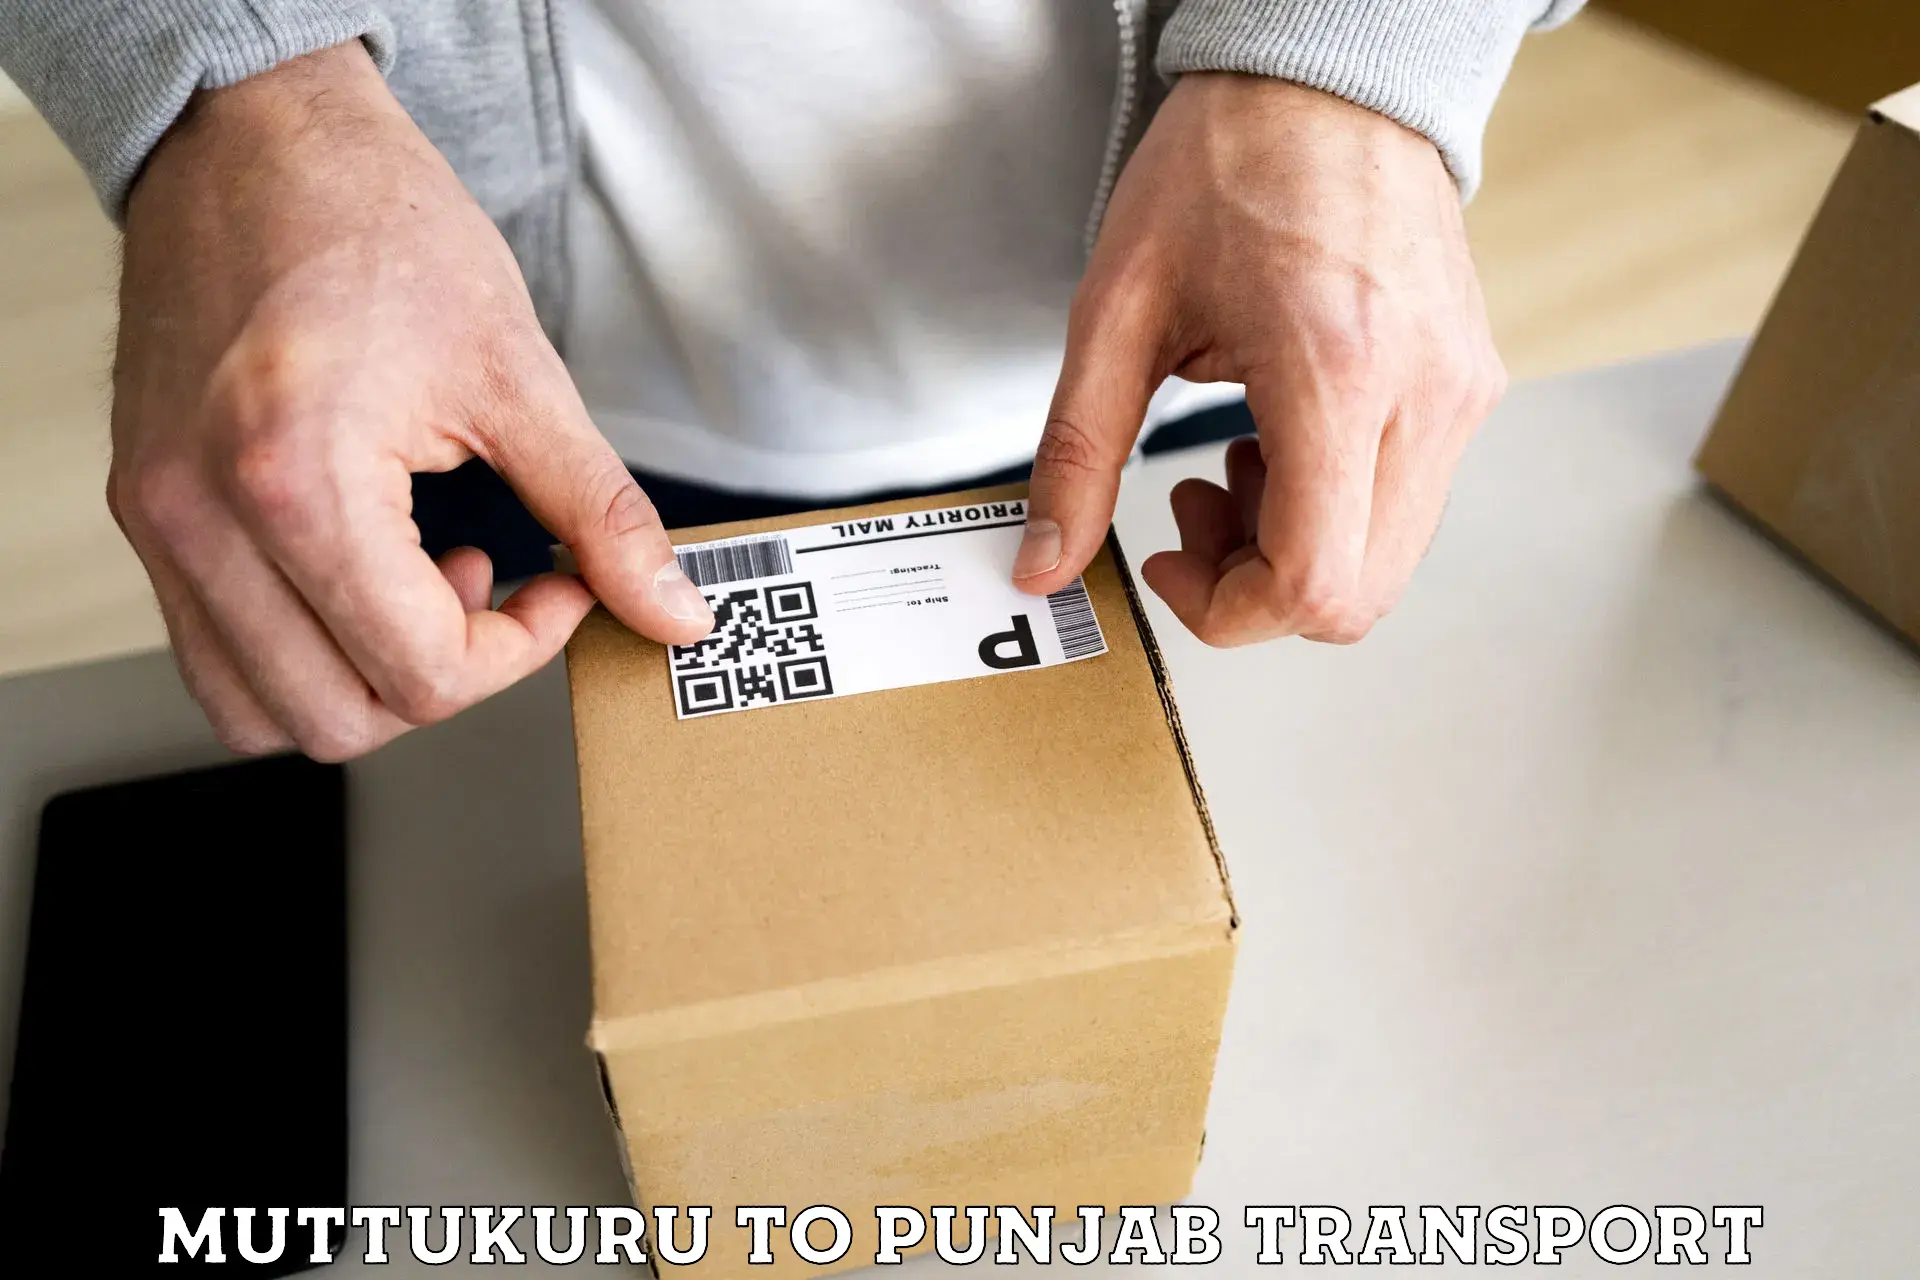 Two wheeler parcel service Muttukuru to Anandpur Sahib